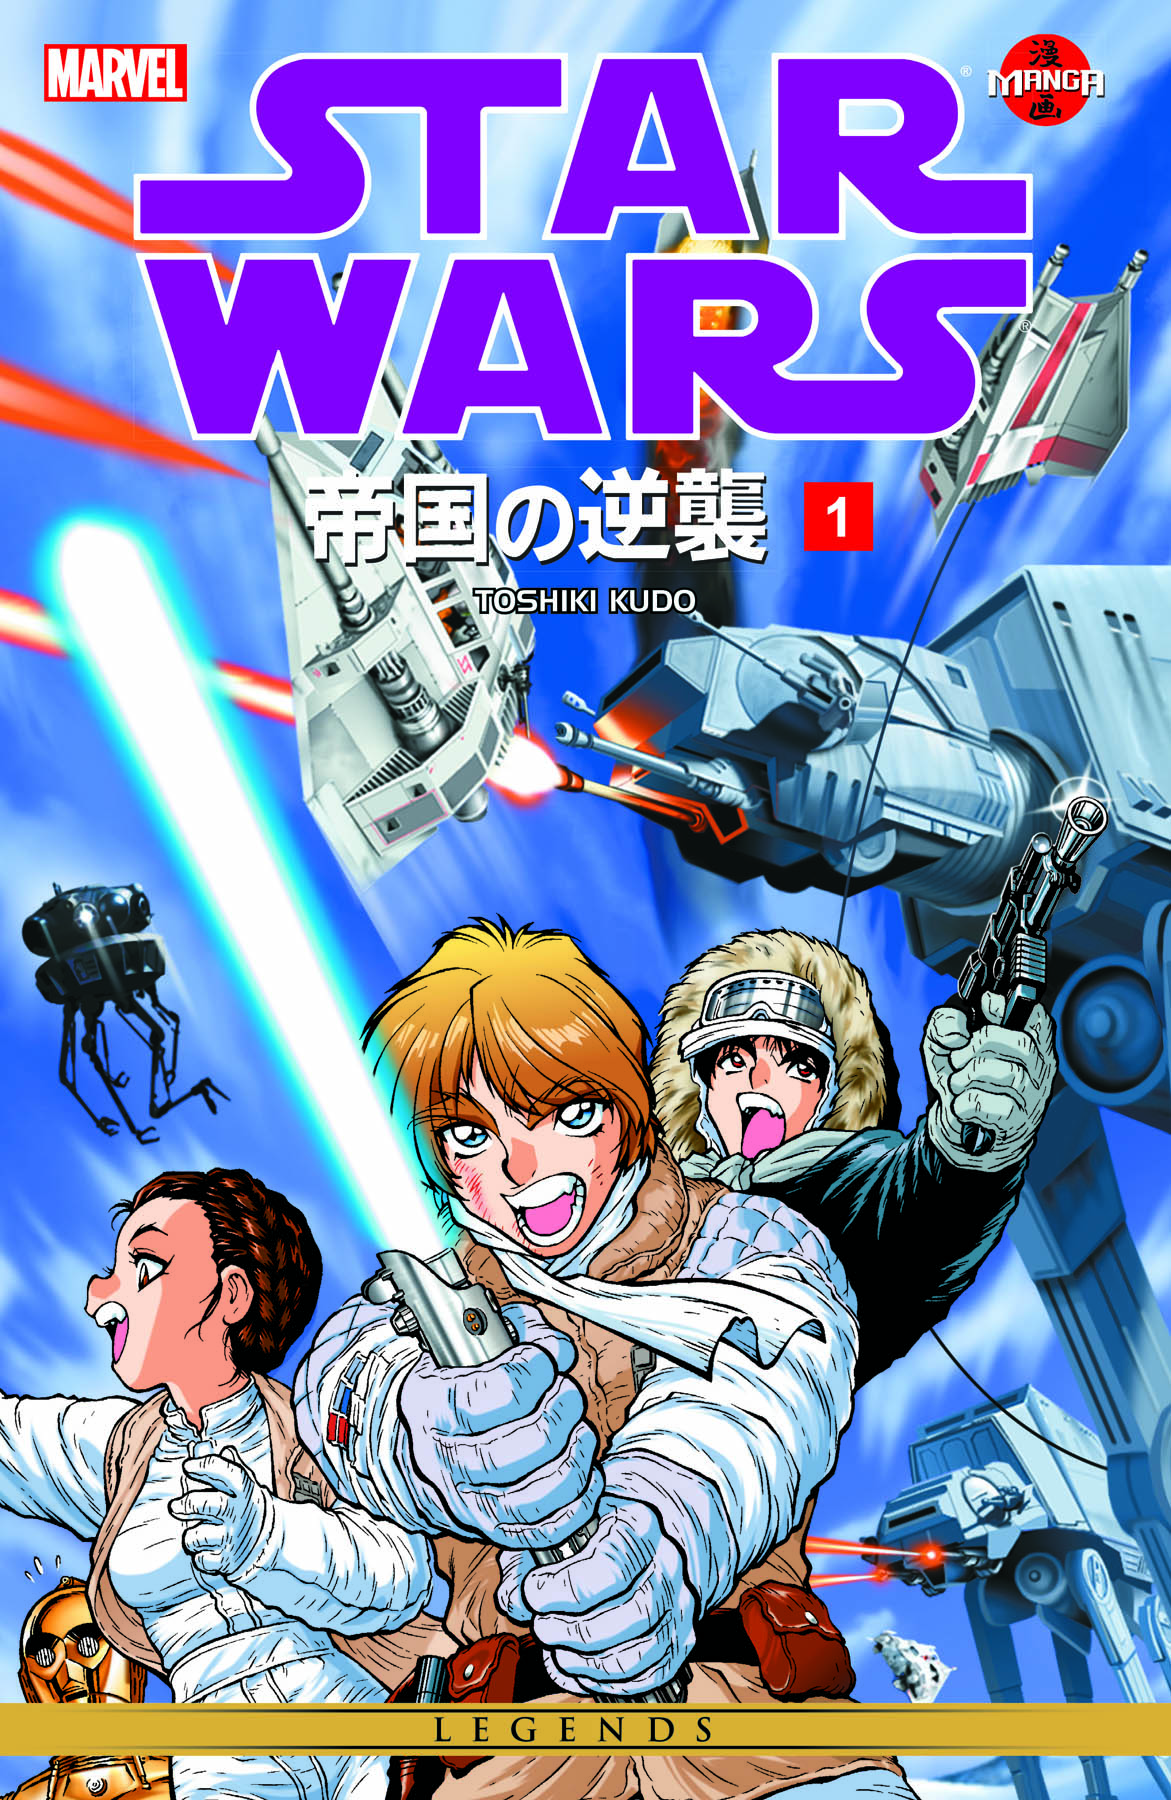 Star Wars The Empire Strikes Back Vol. 1 (Trade Paperback)